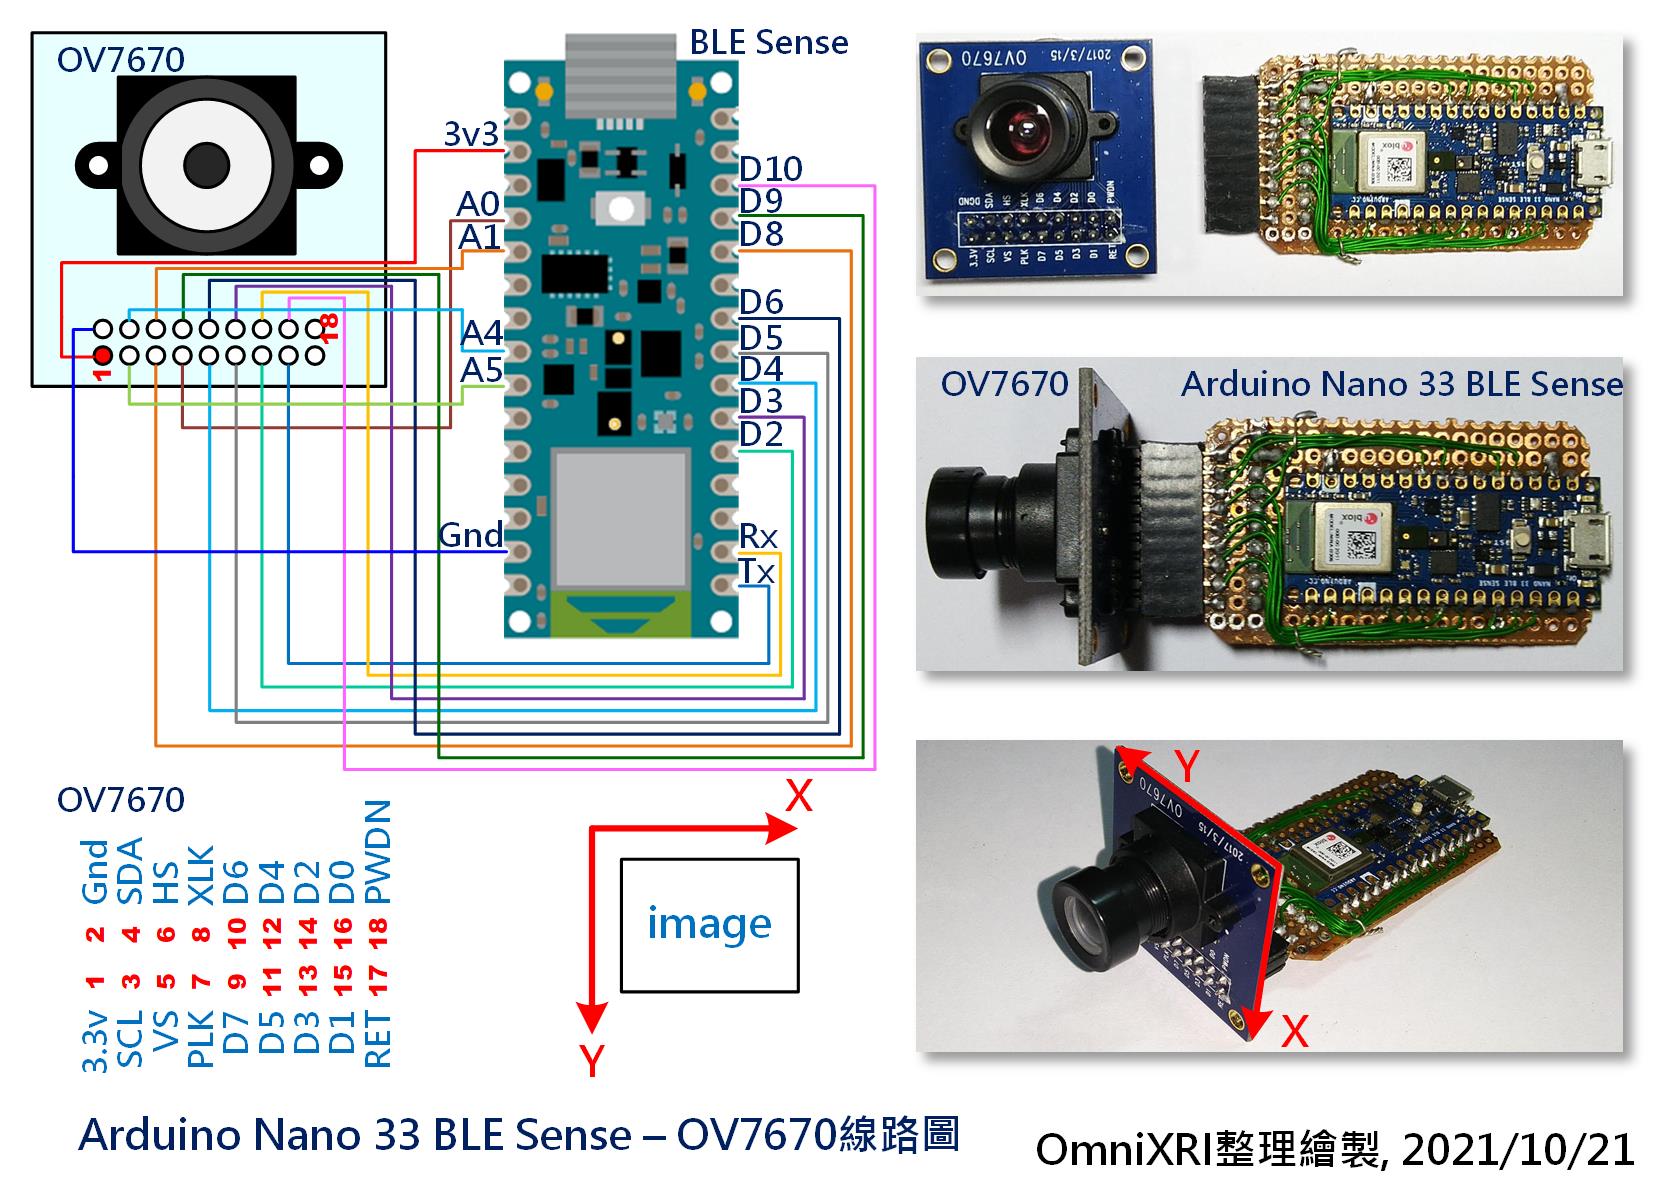 Arduino Nano 33 BLE Sense連接OV7670攝影機模組（無FIFO）之參考線路圖